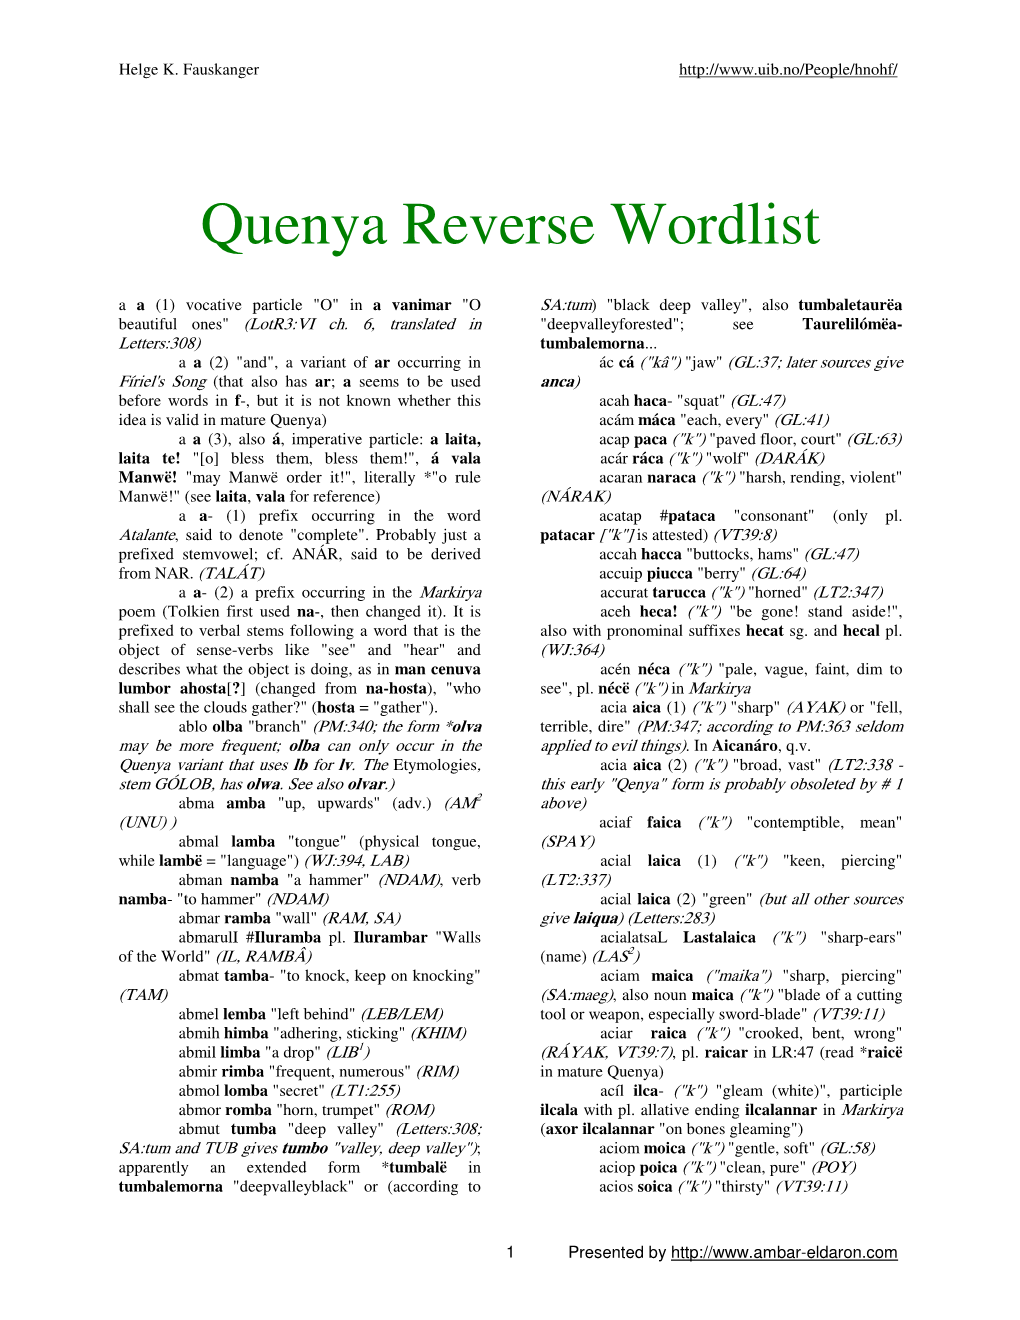 Quenya Reverse Wordlist